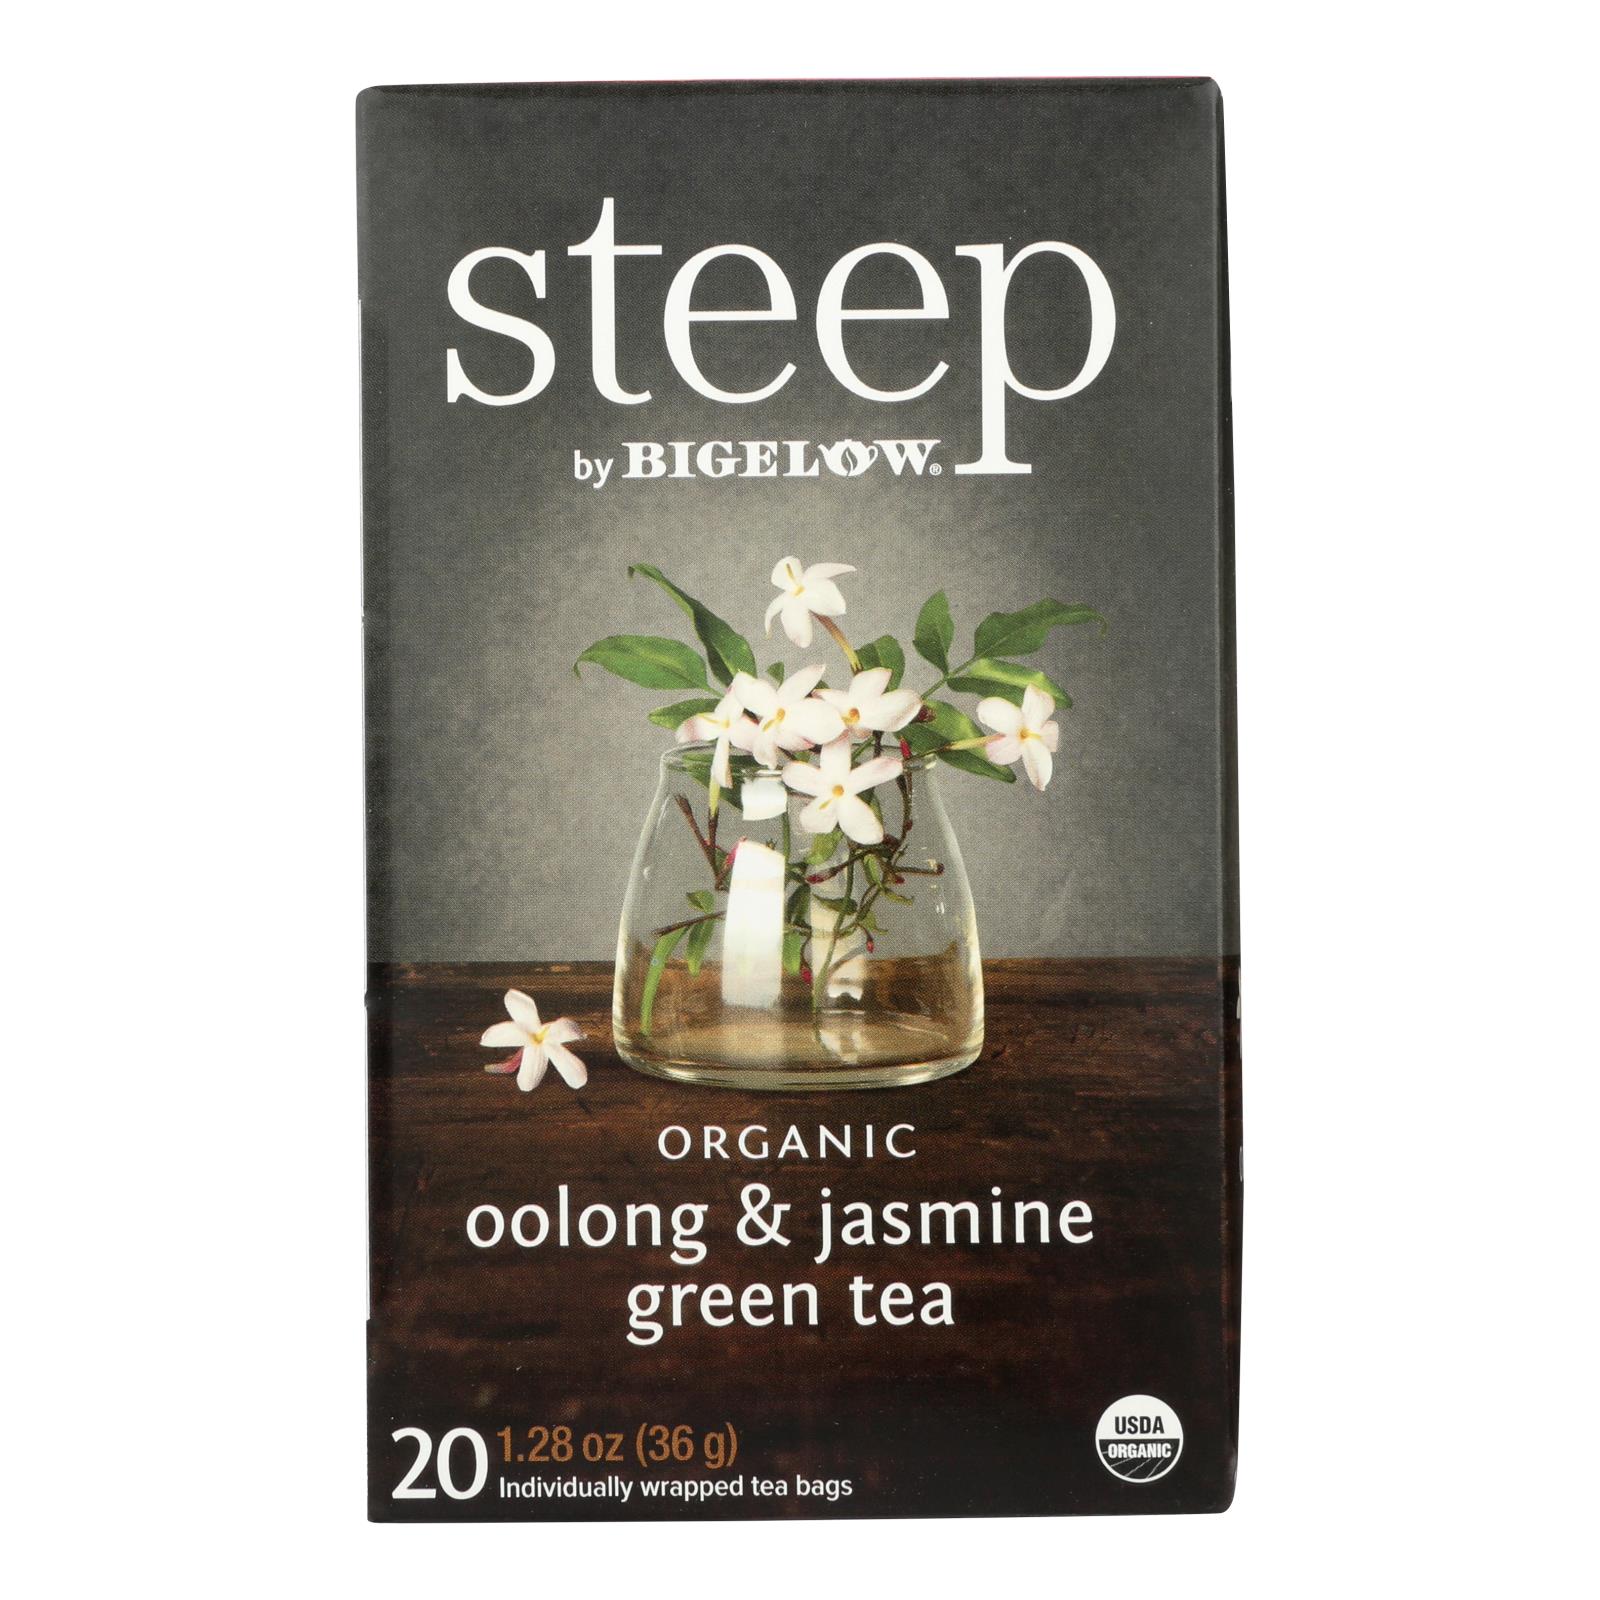 Steep By Bigelow Organic Oolong And Jasmine Green Tea - 6개 묶음상품 - 20 BAGS